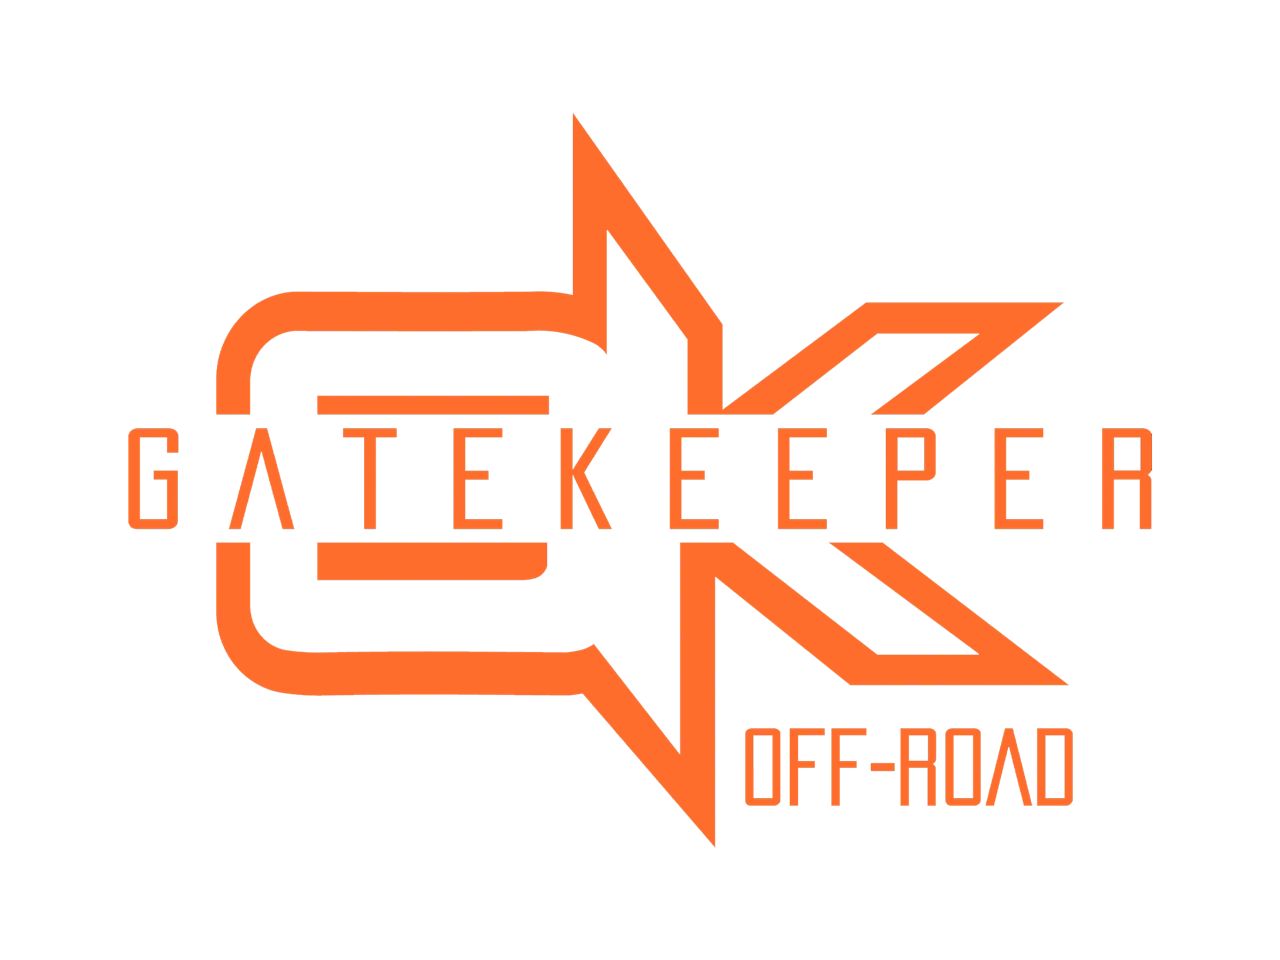 GateKeeper Off-Road Parts